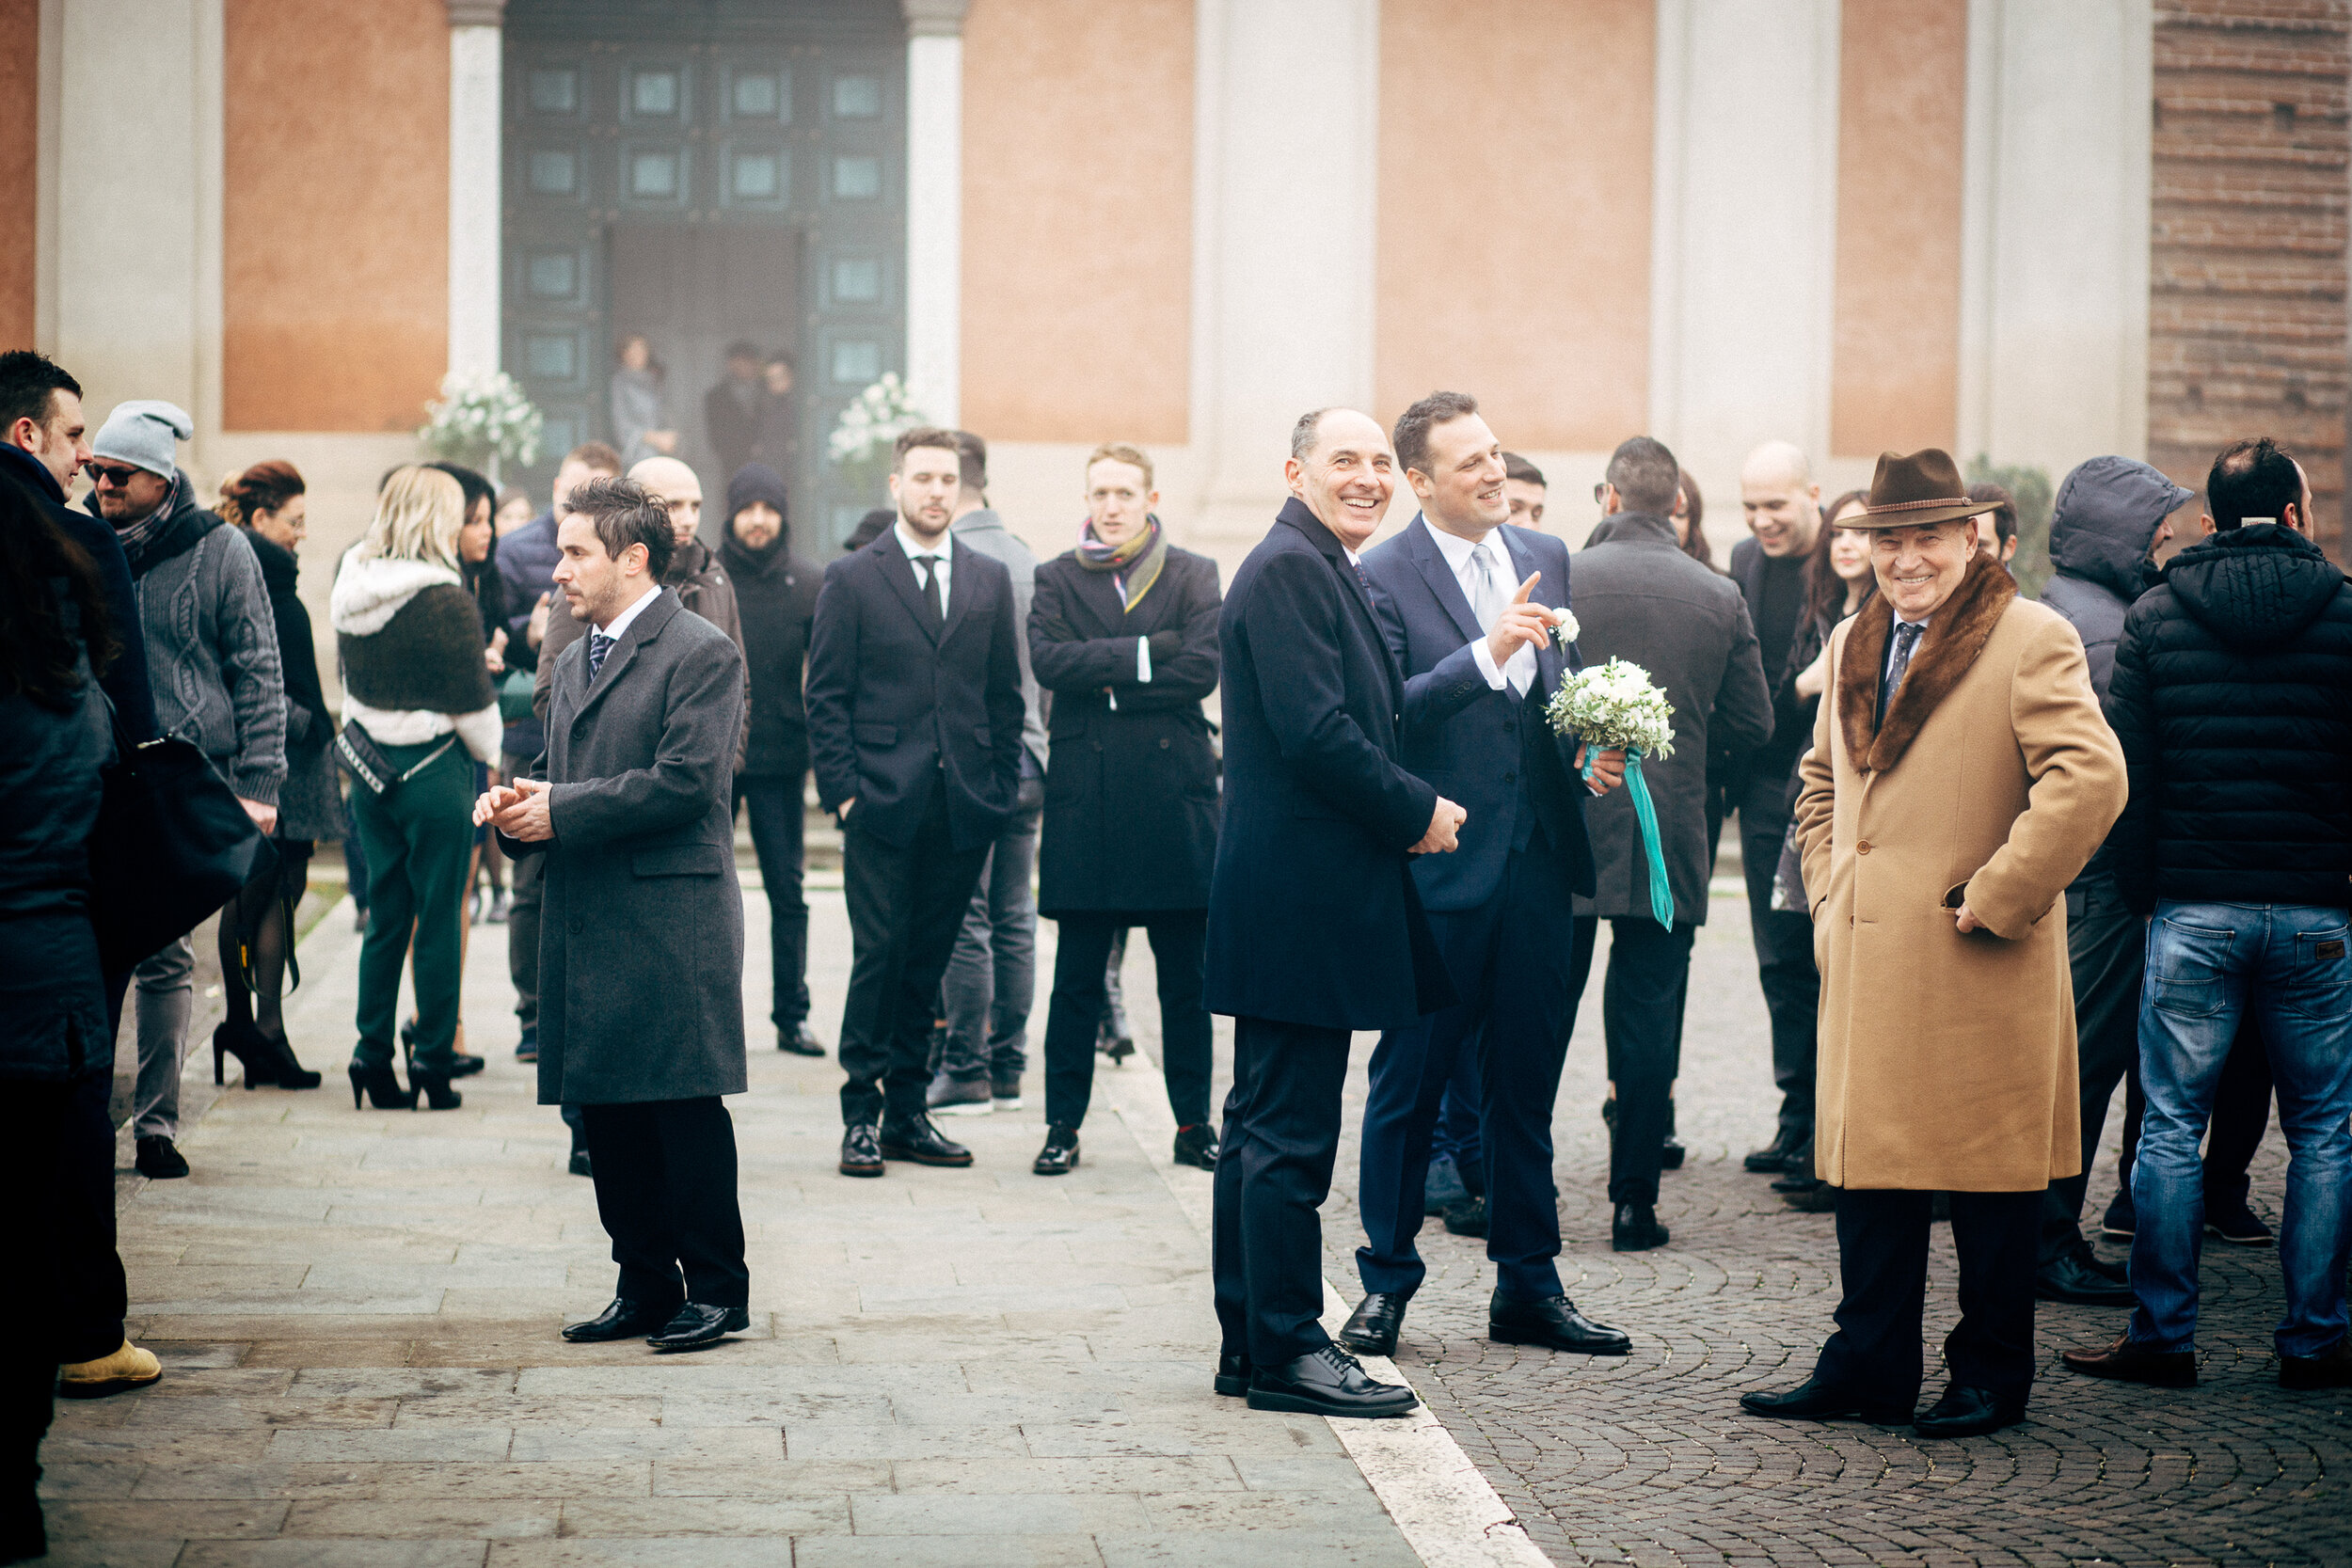 wedding_winter_invernale_relais_castello_bevilacqua_reportage_giulia_fabio_0010.jpg